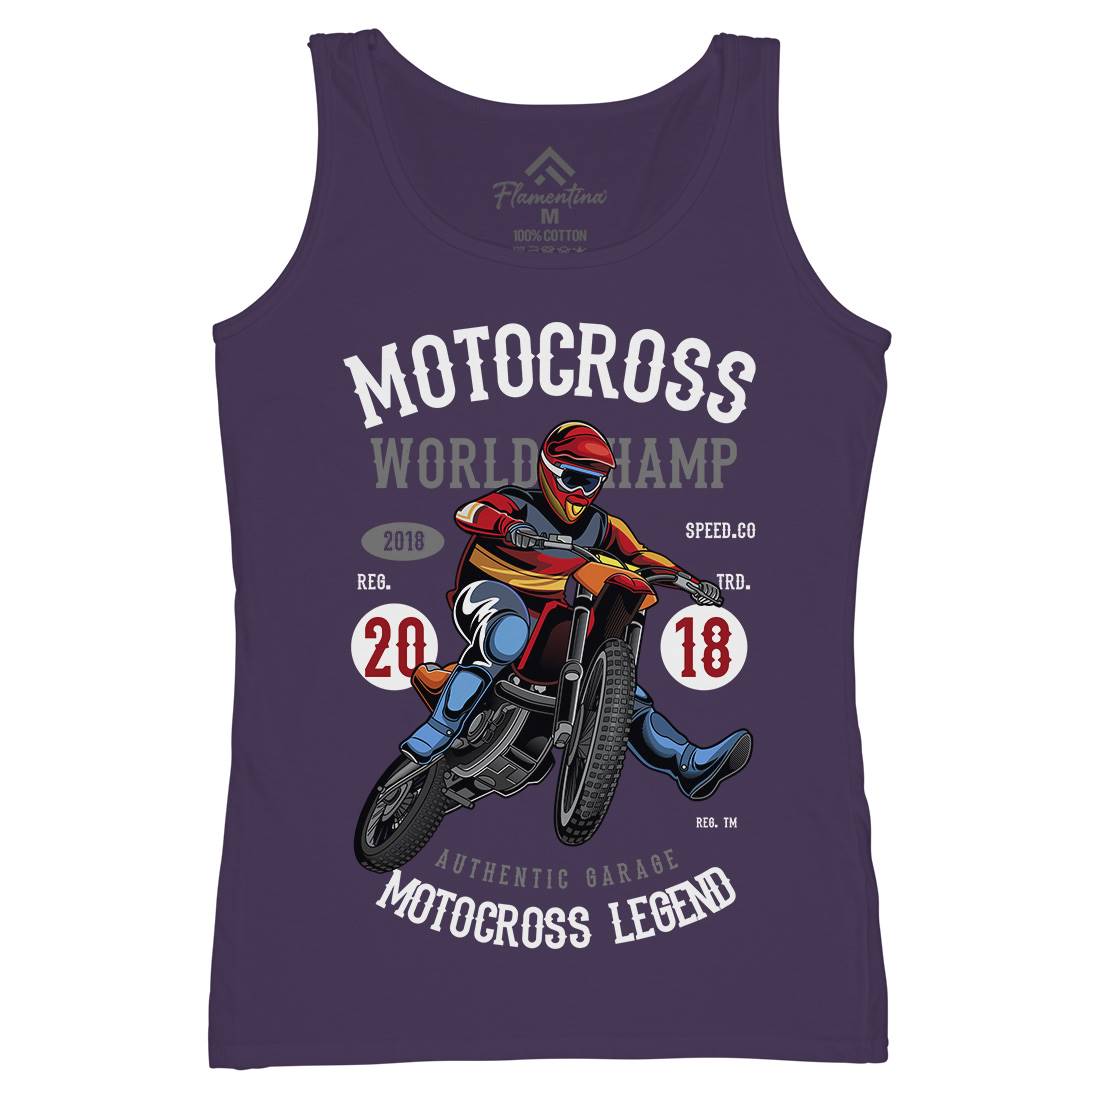 Motocross World Champ Womens Organic Tank Top Vest Motorcycles C398